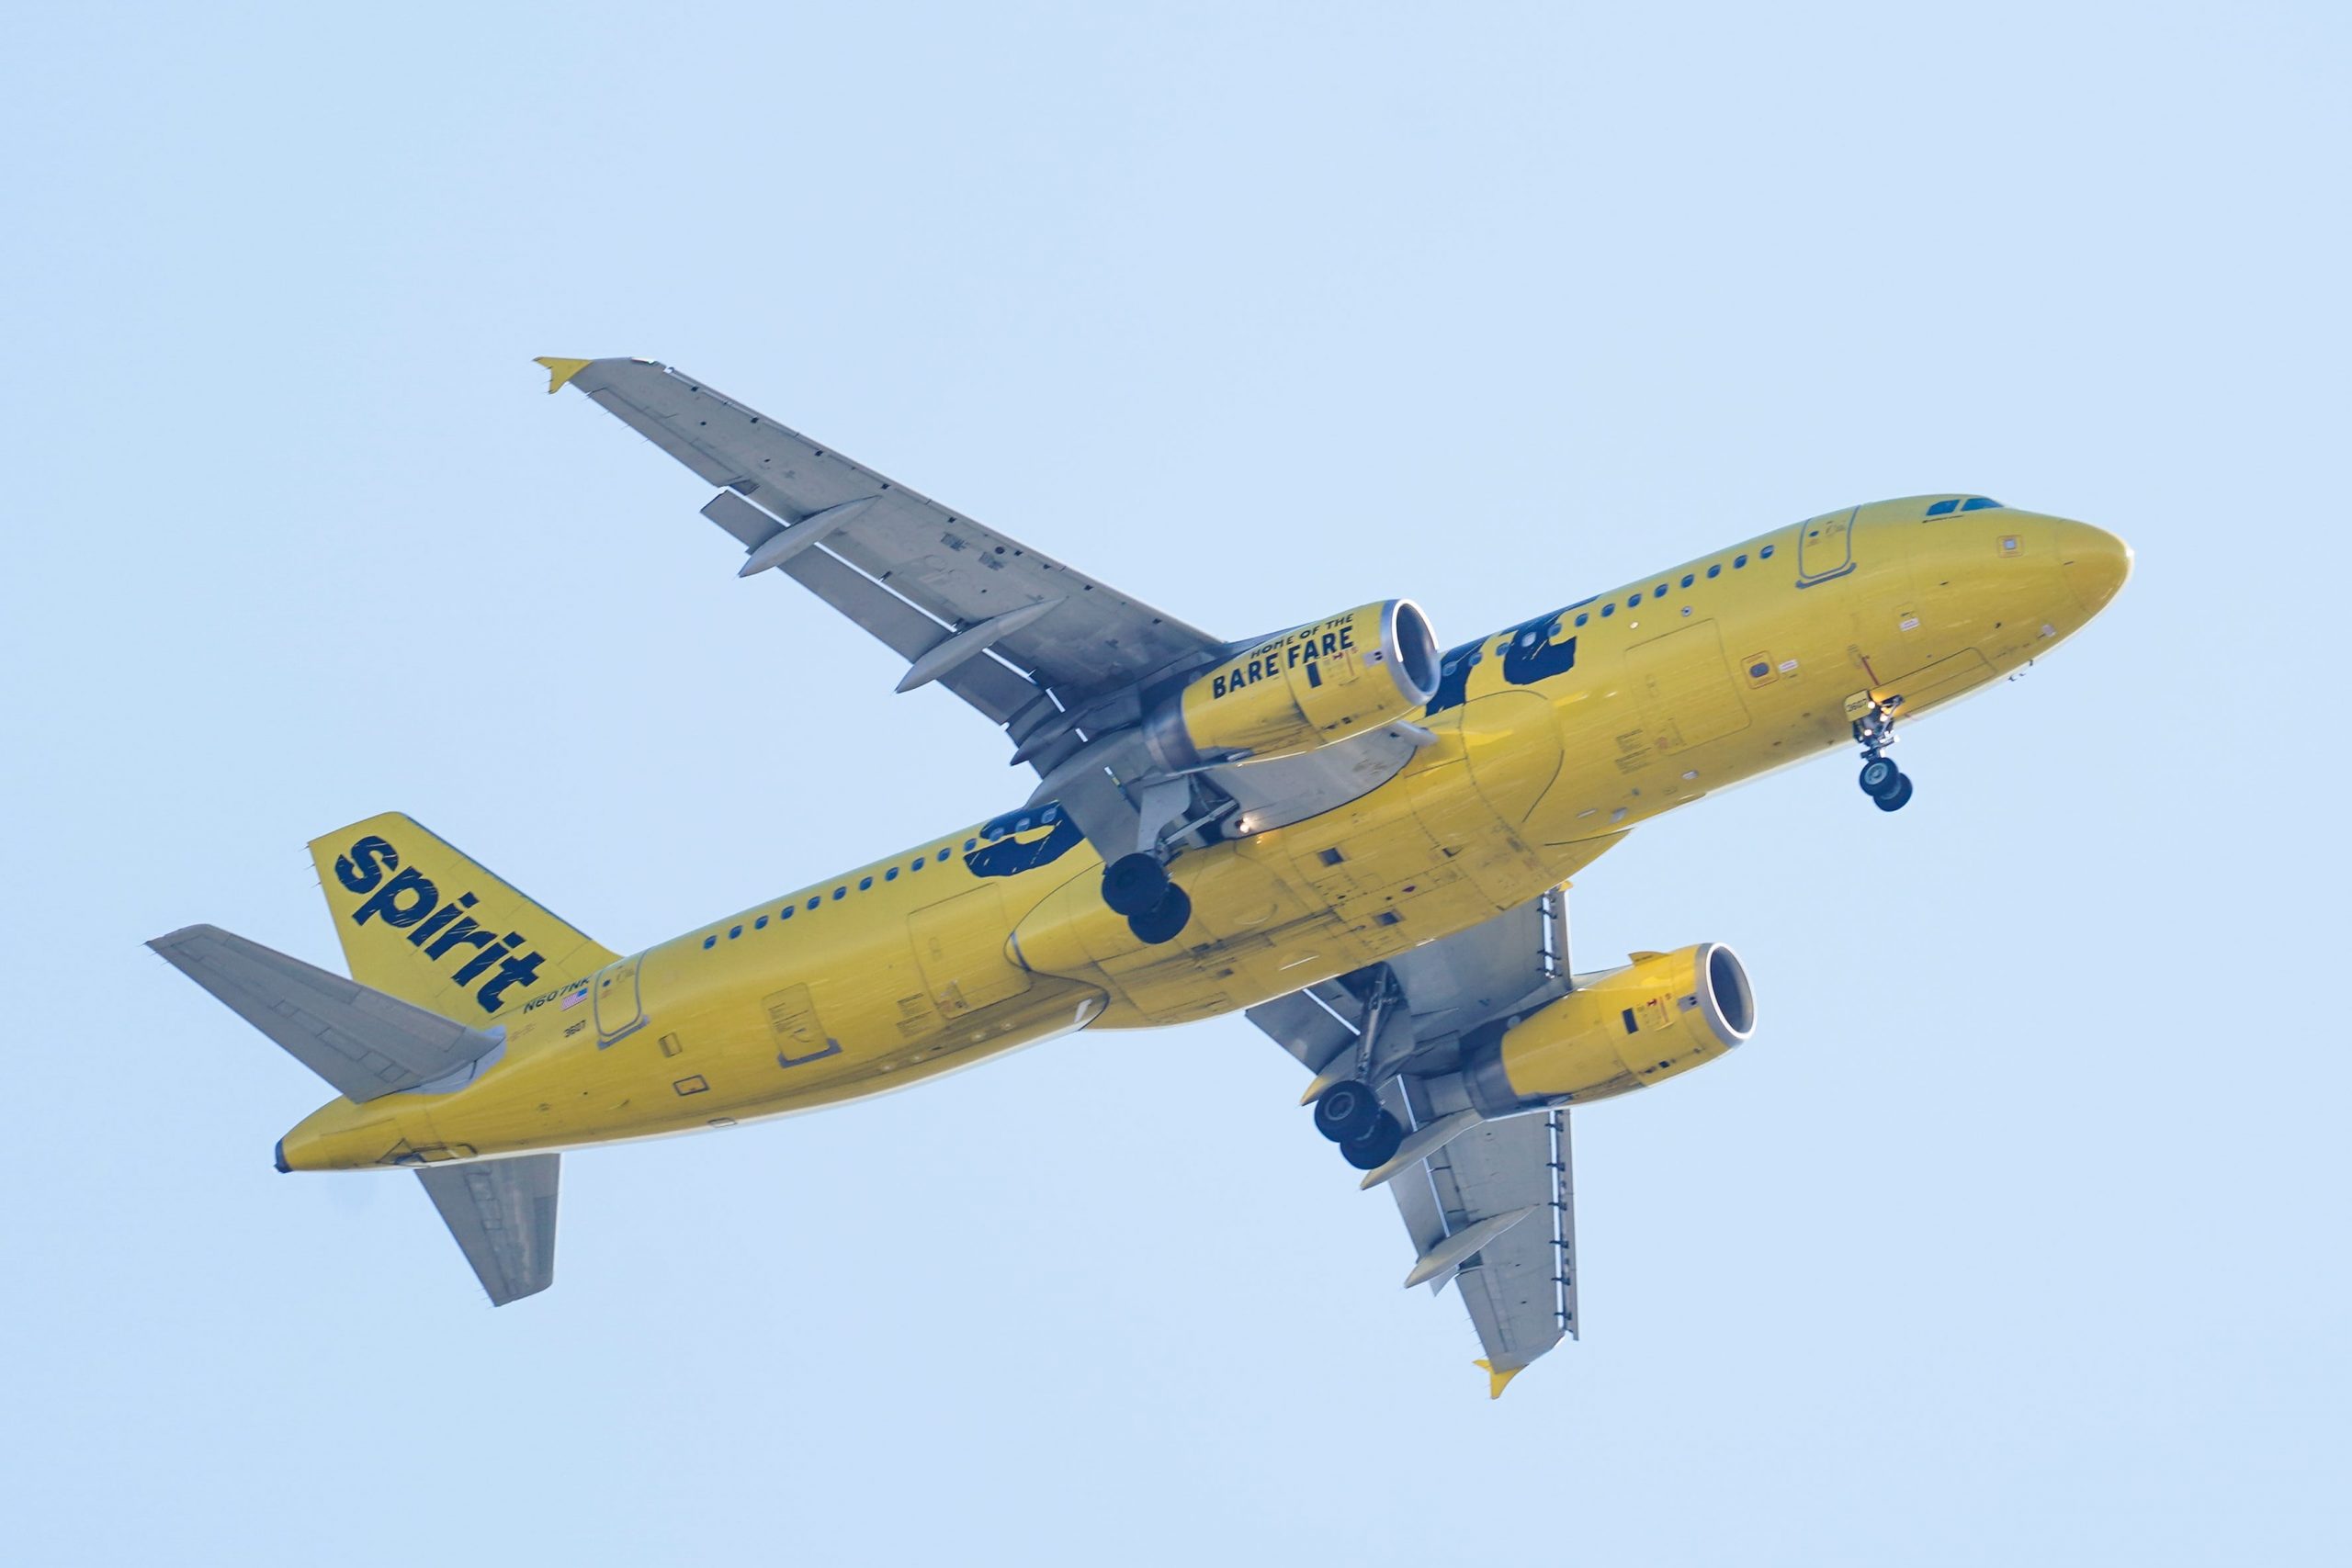 A yellow Spirit Airlines plane descending against a pale blue sky